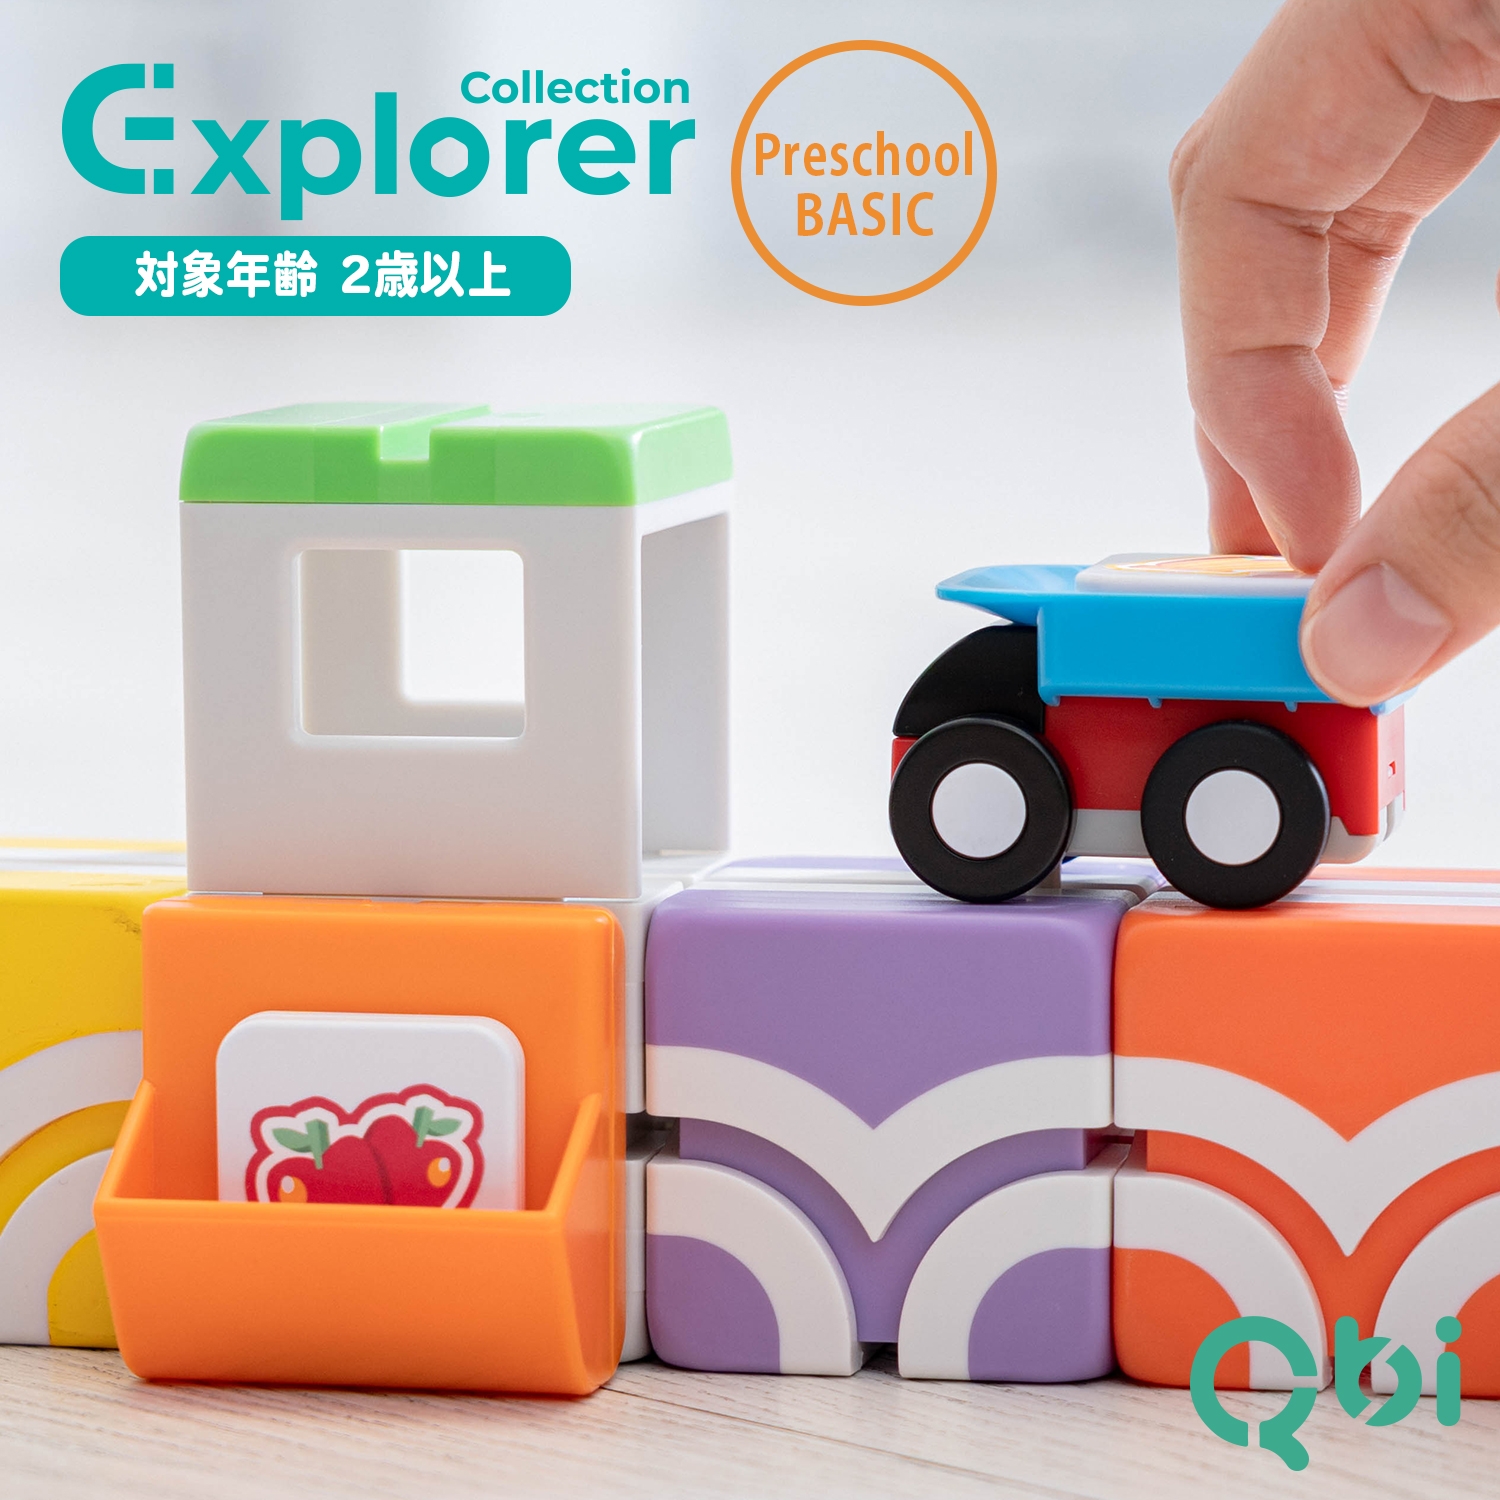 <Qbi toy>Qbi Explorer Preschool BASIC